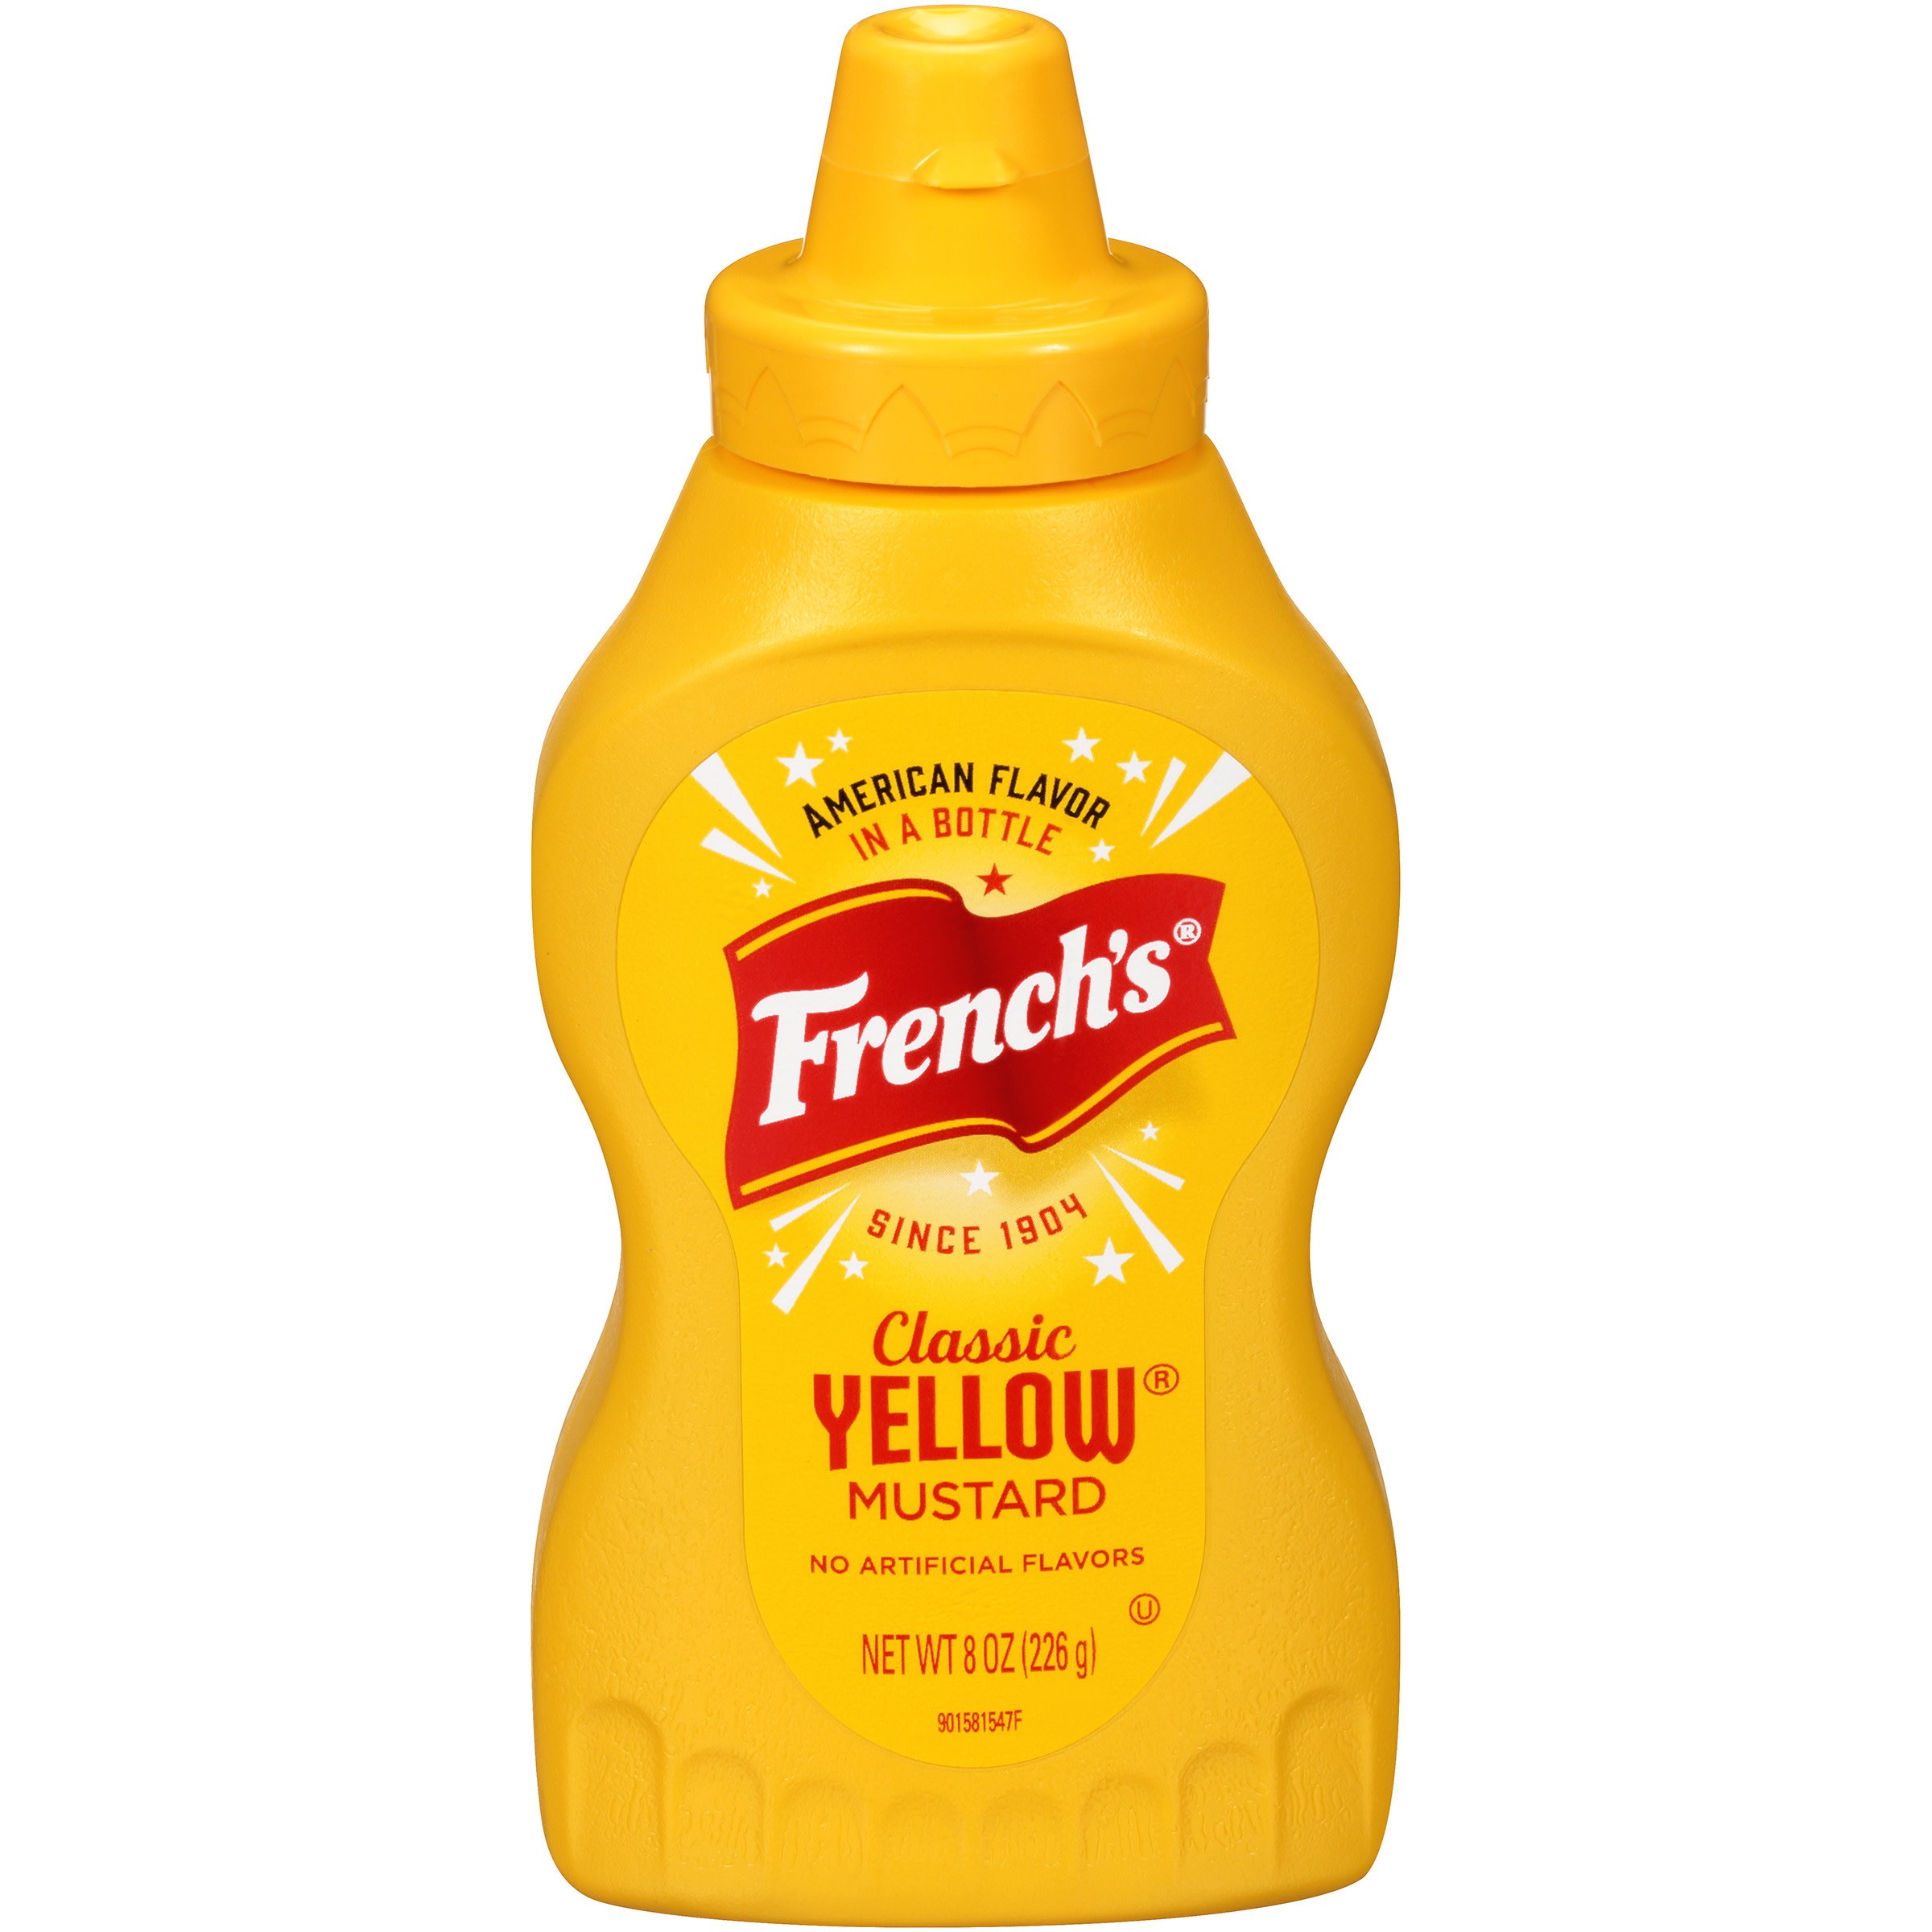 French's Classic Yellow Mustard - Shop Mustard at H-E-B